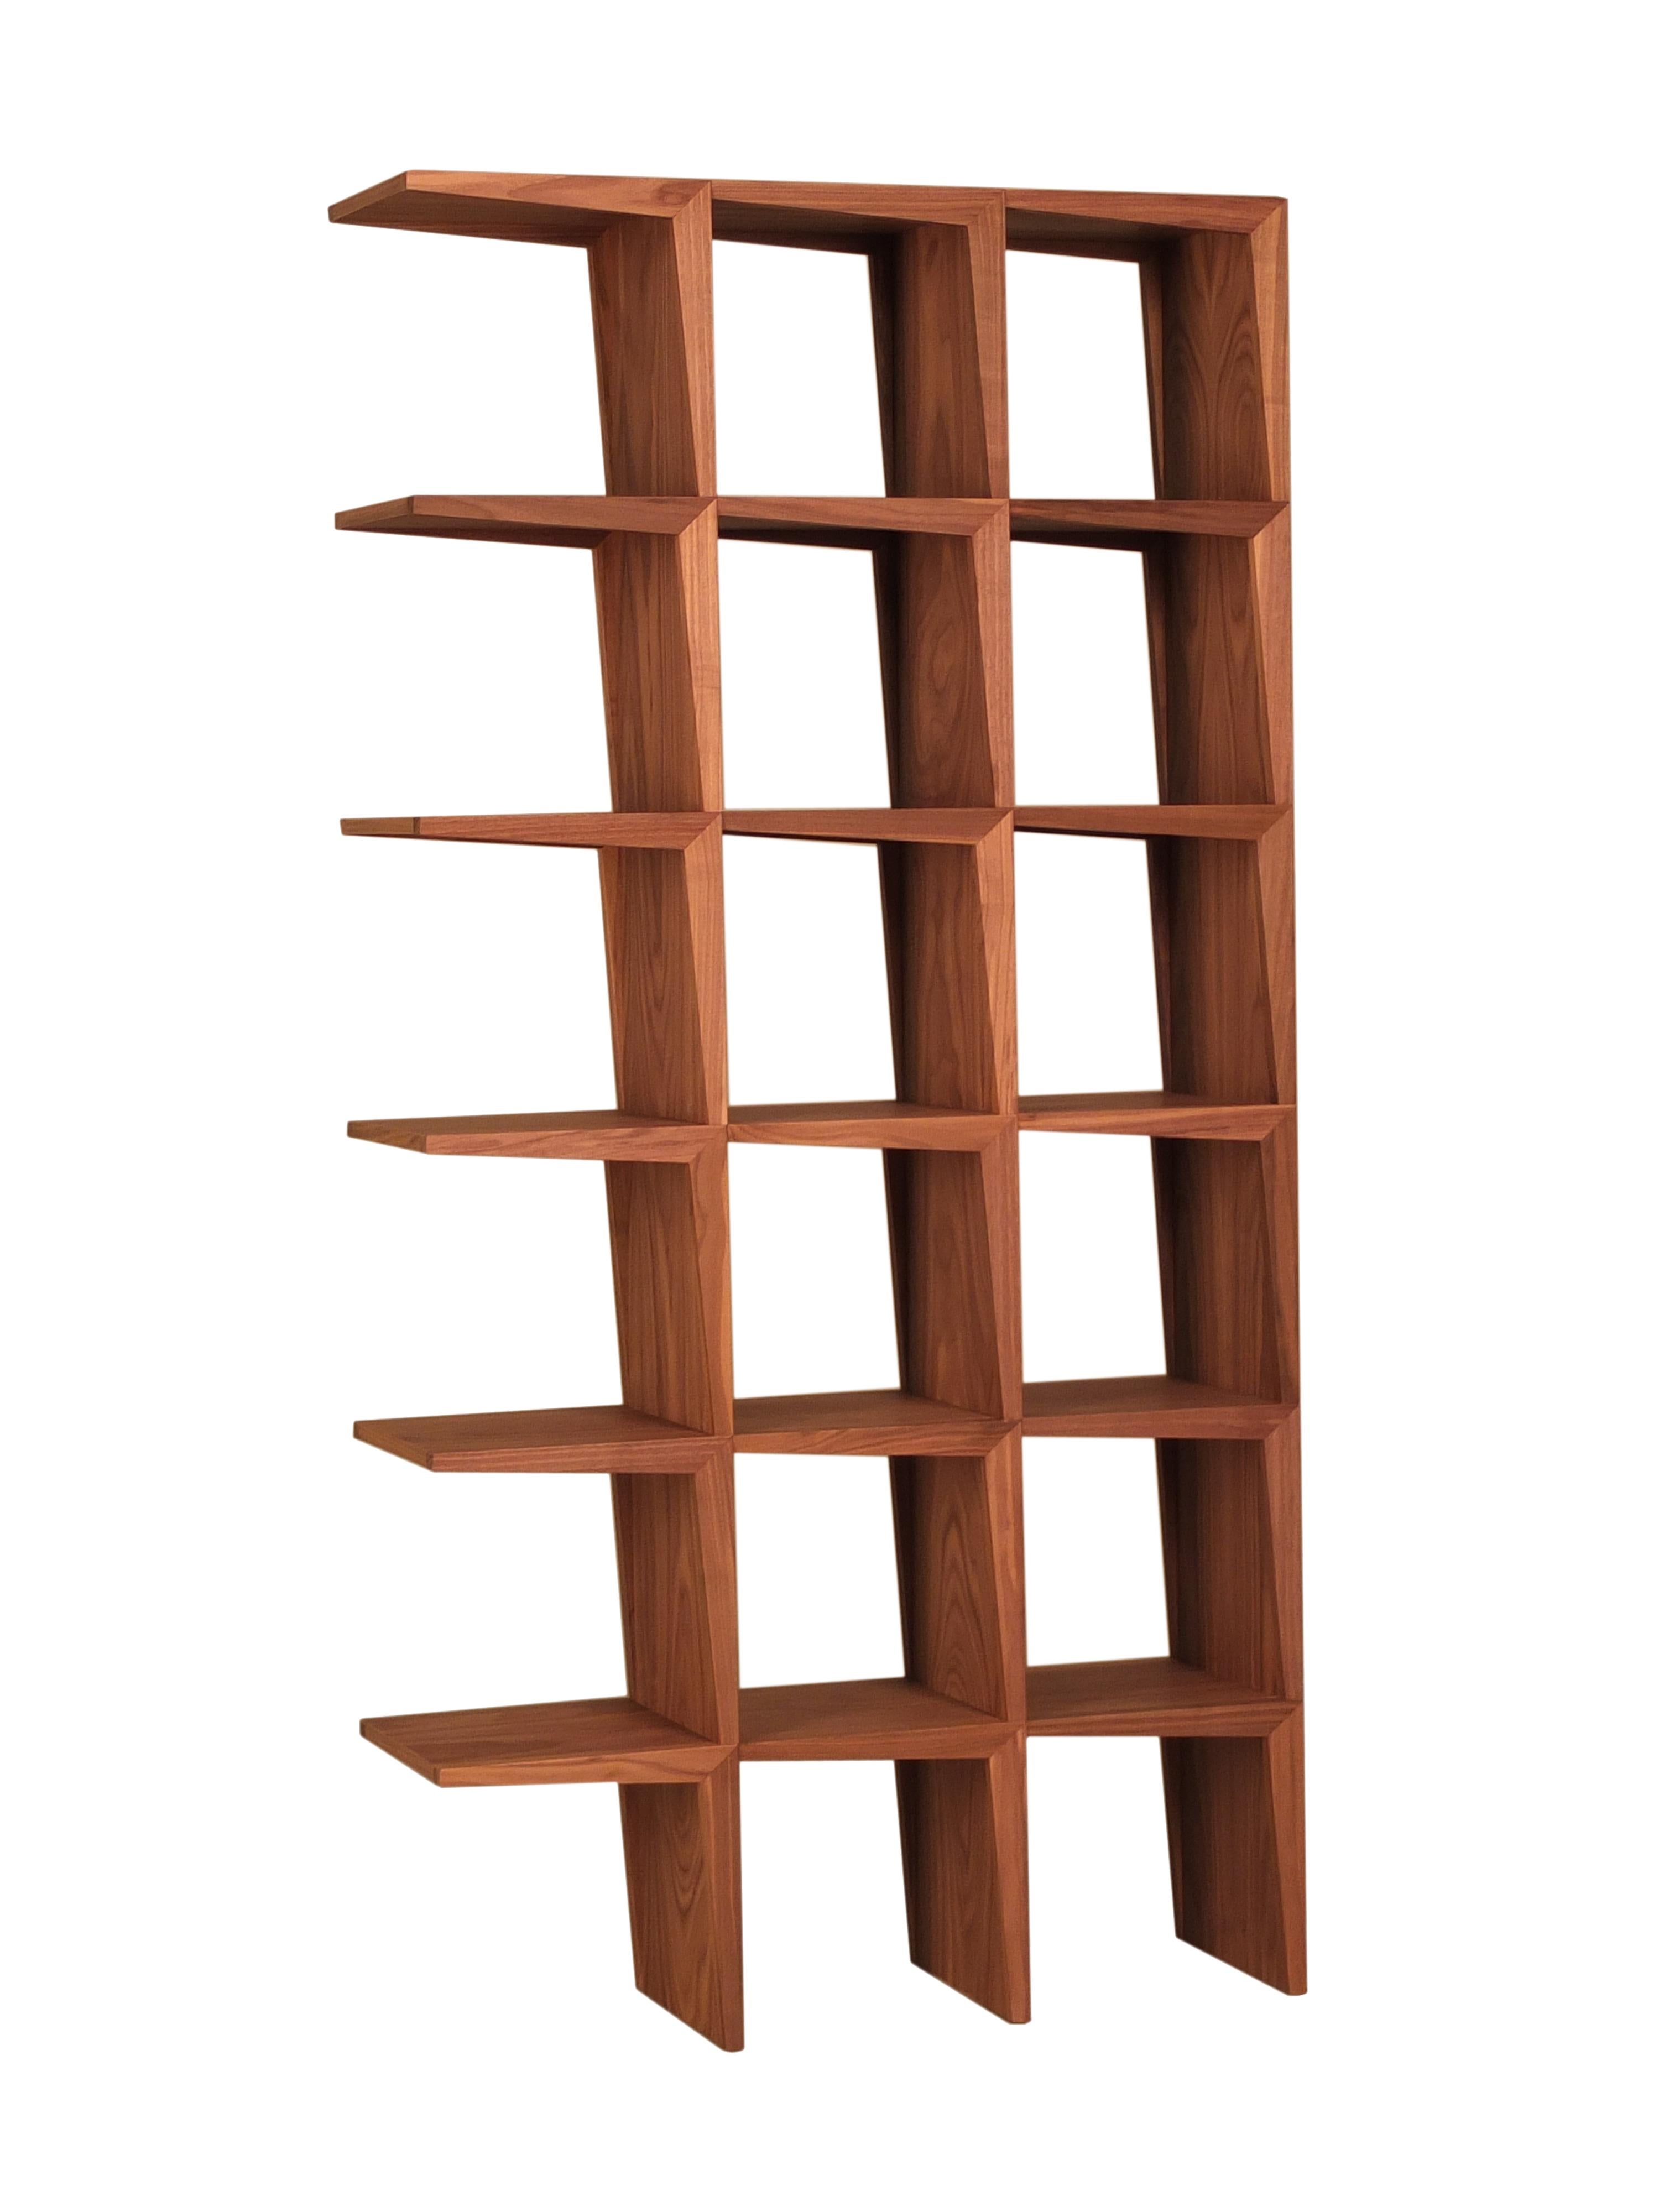 Italian Kant, Freestanding Bookshelf Made of Canaletto Walnut Wood, by Morelato